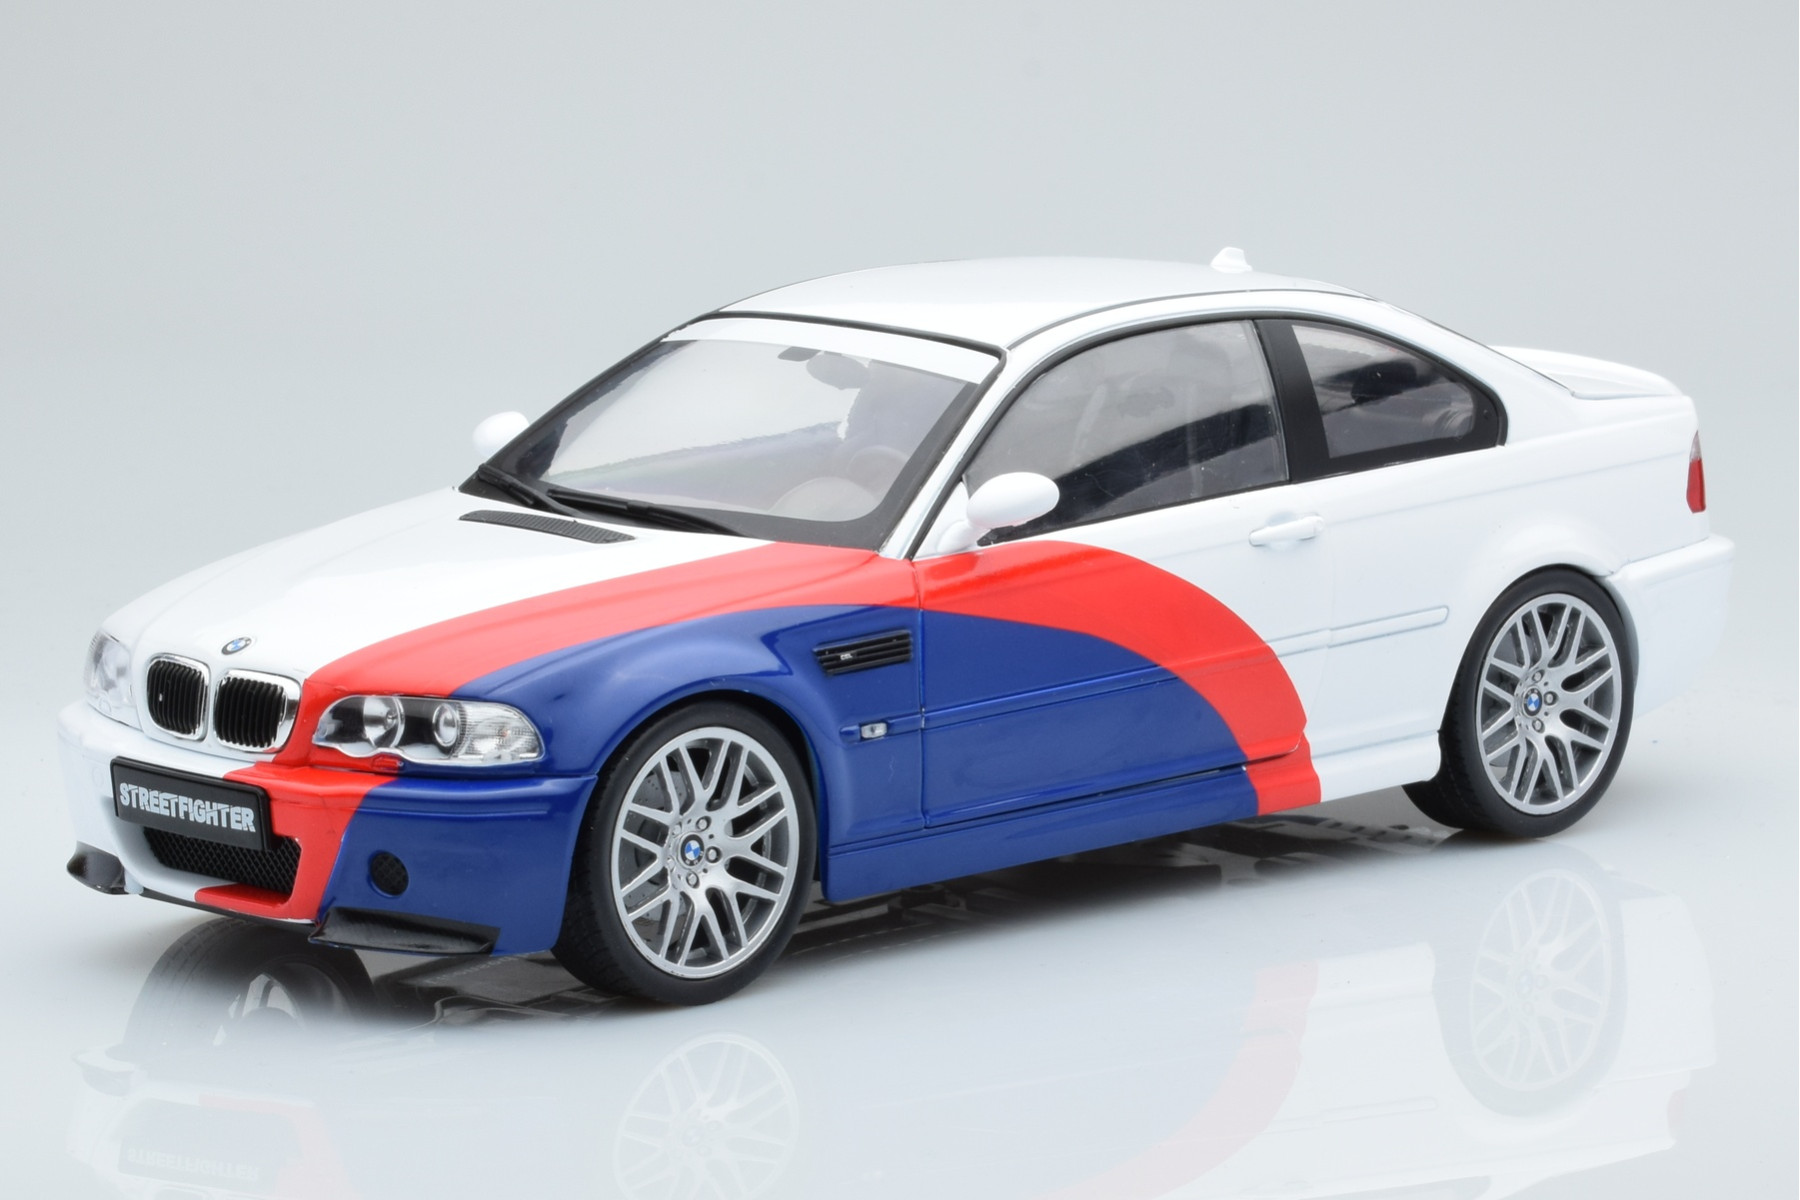 BMW E46 M3 - BMW_